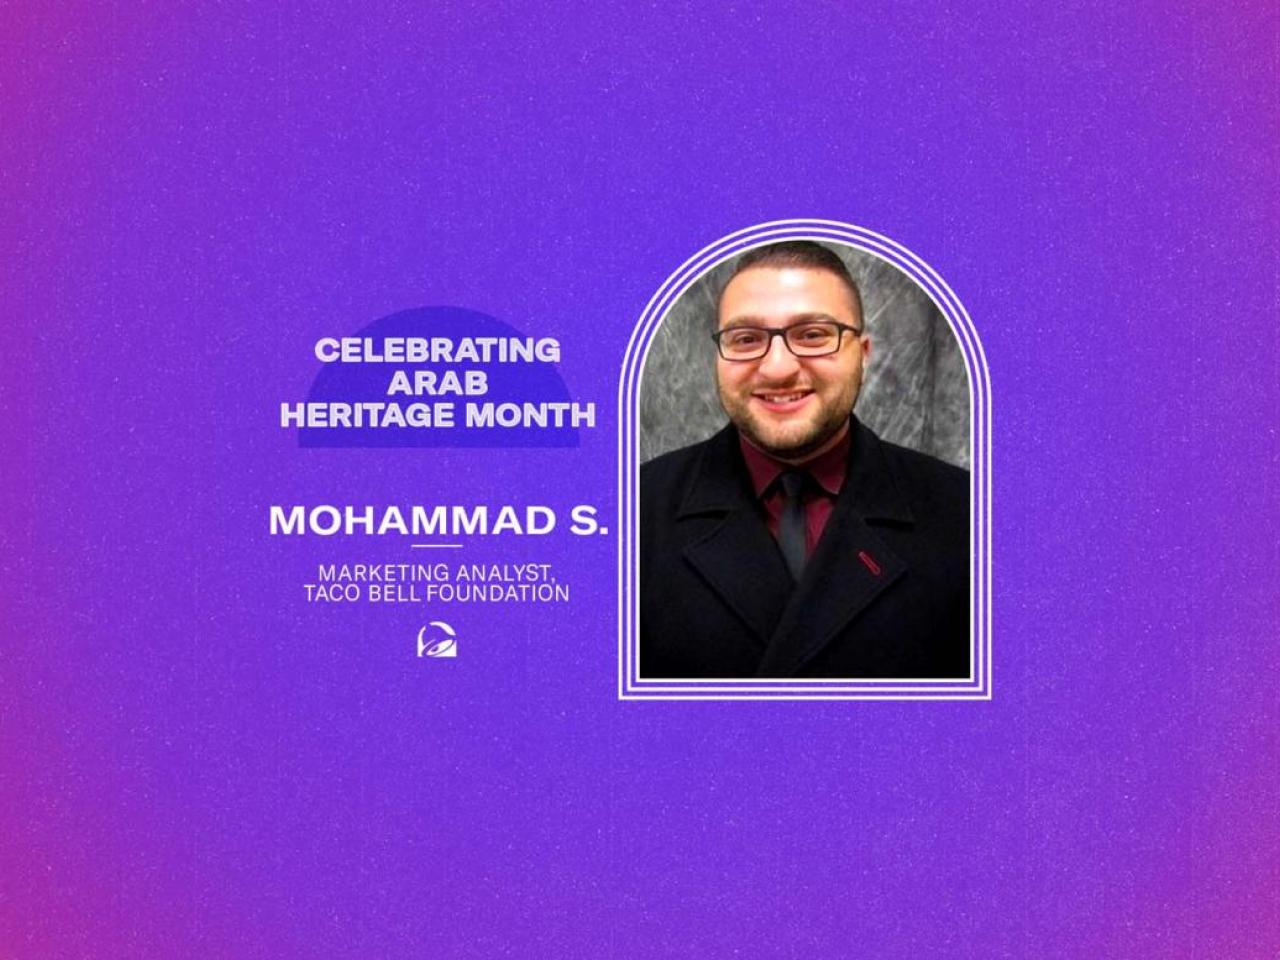 Mohammad S. "Celebrating Arab Heritage Month."